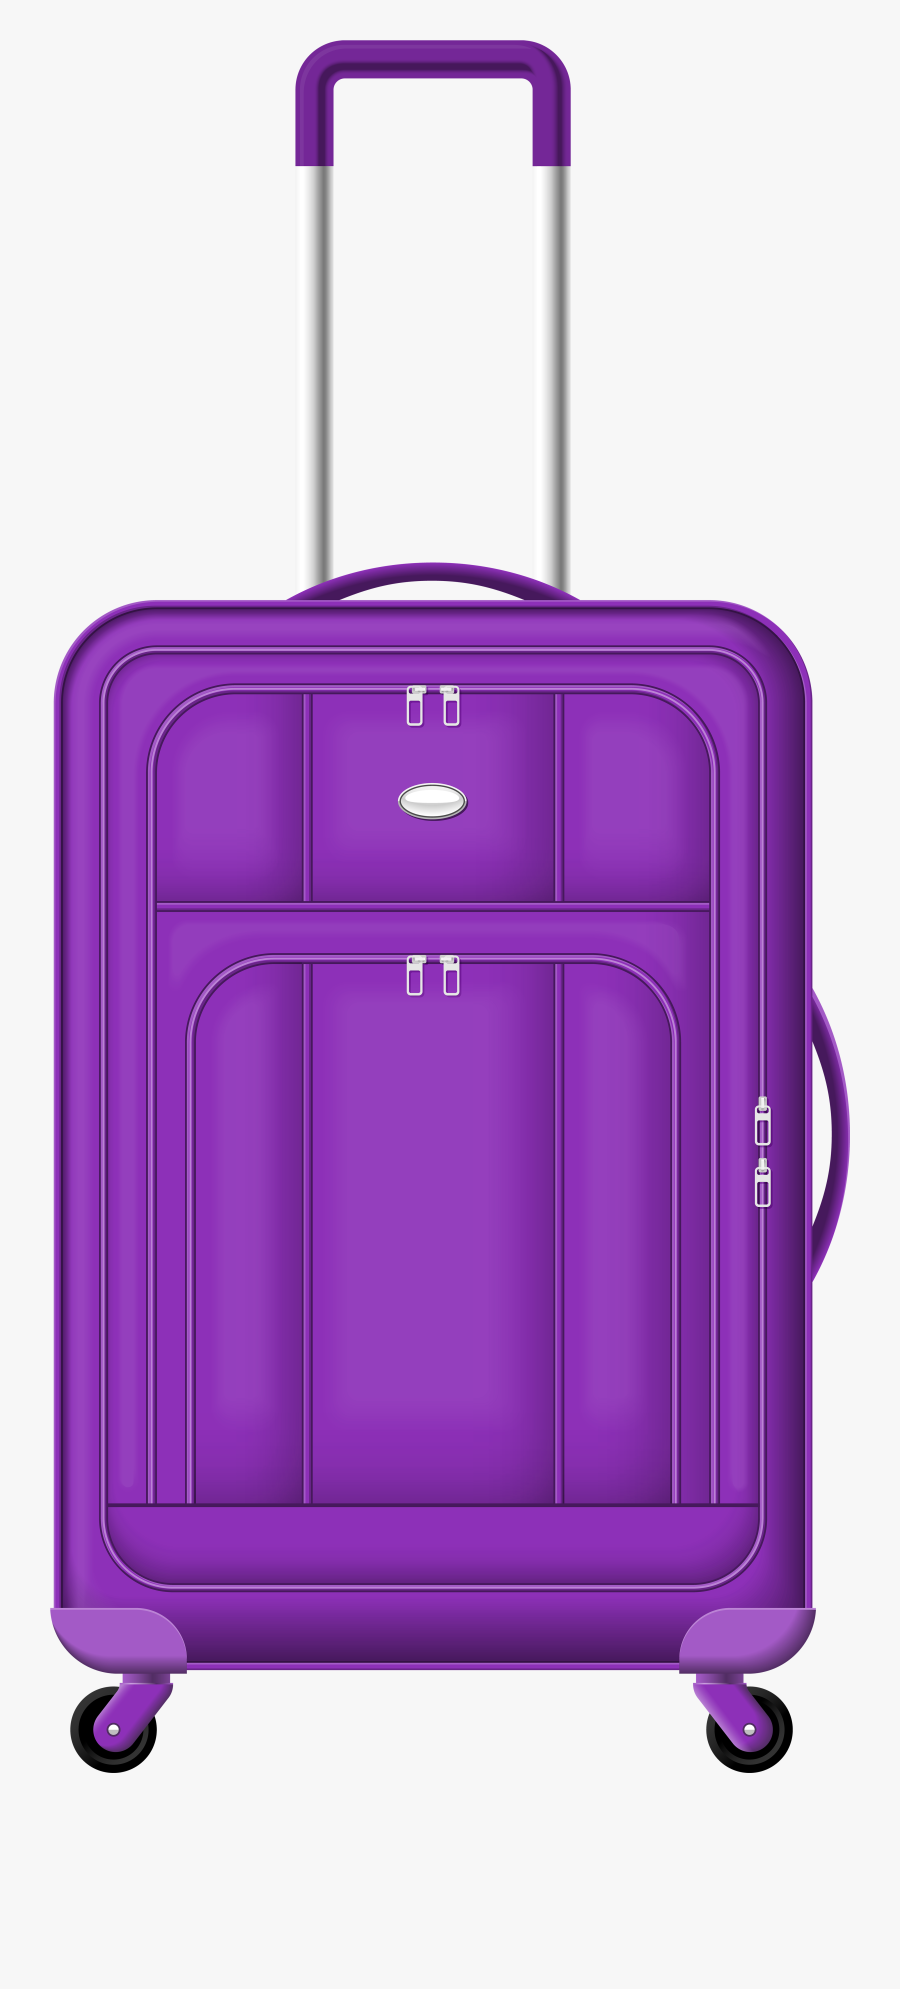 Luggage Clipart Kid Suitcase - Bag Travel Purple Png, Transparent Clipart